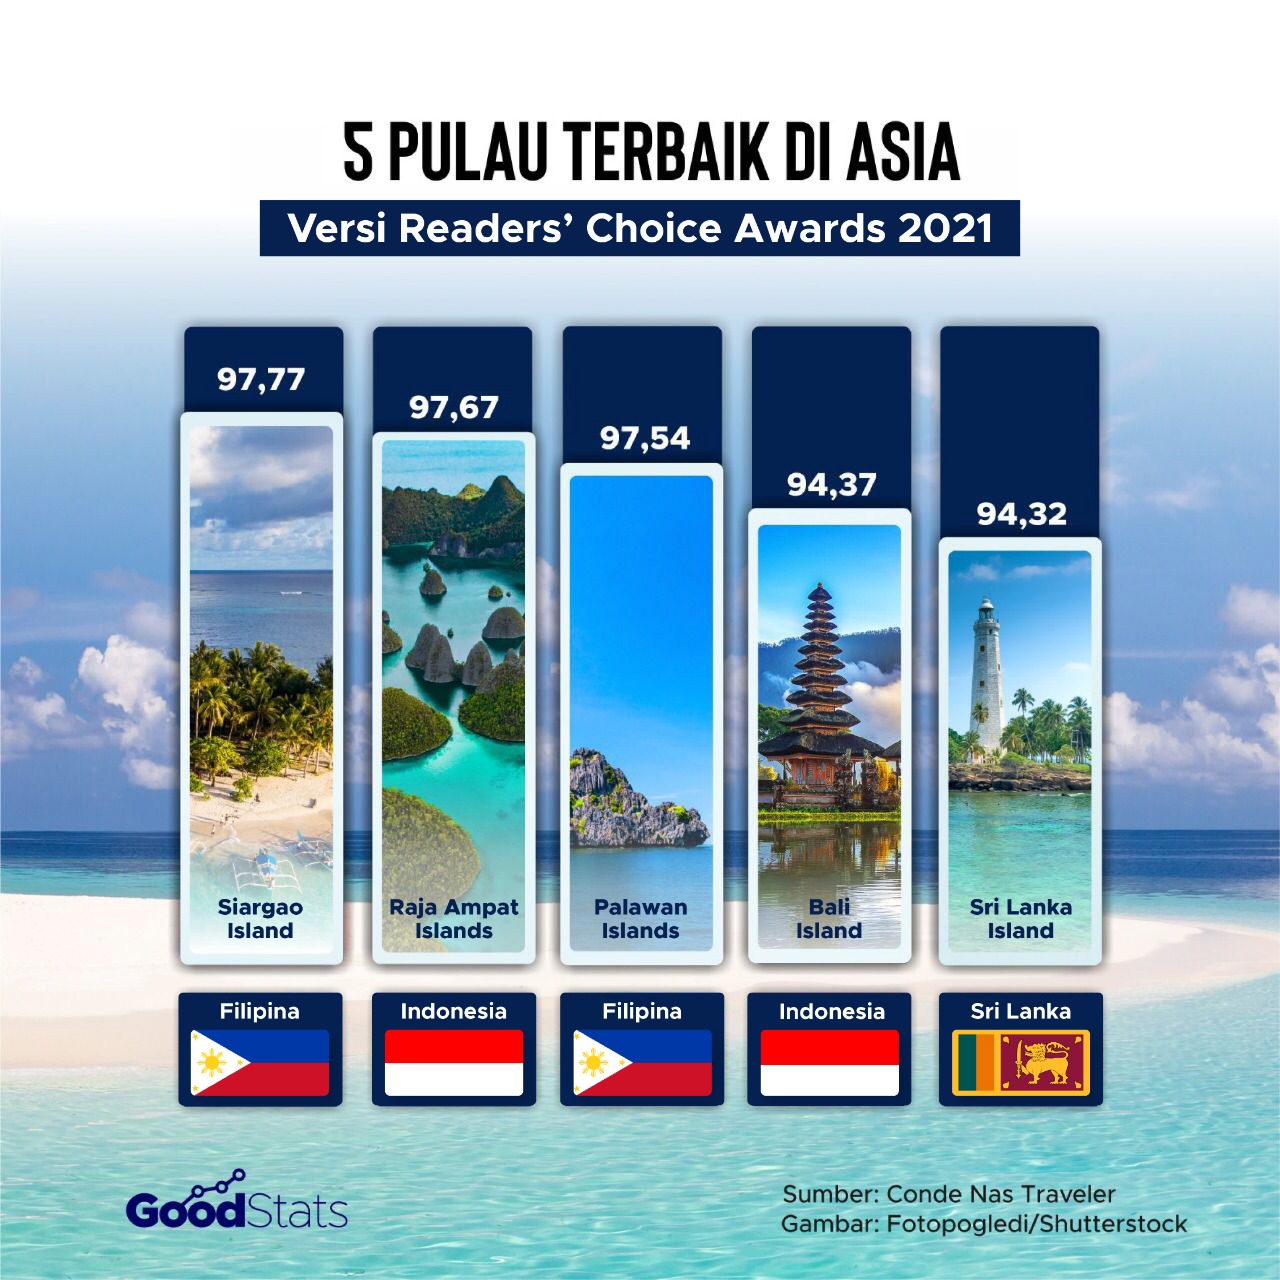 5 pulau terbaik di Asia 2021 | GoodStats